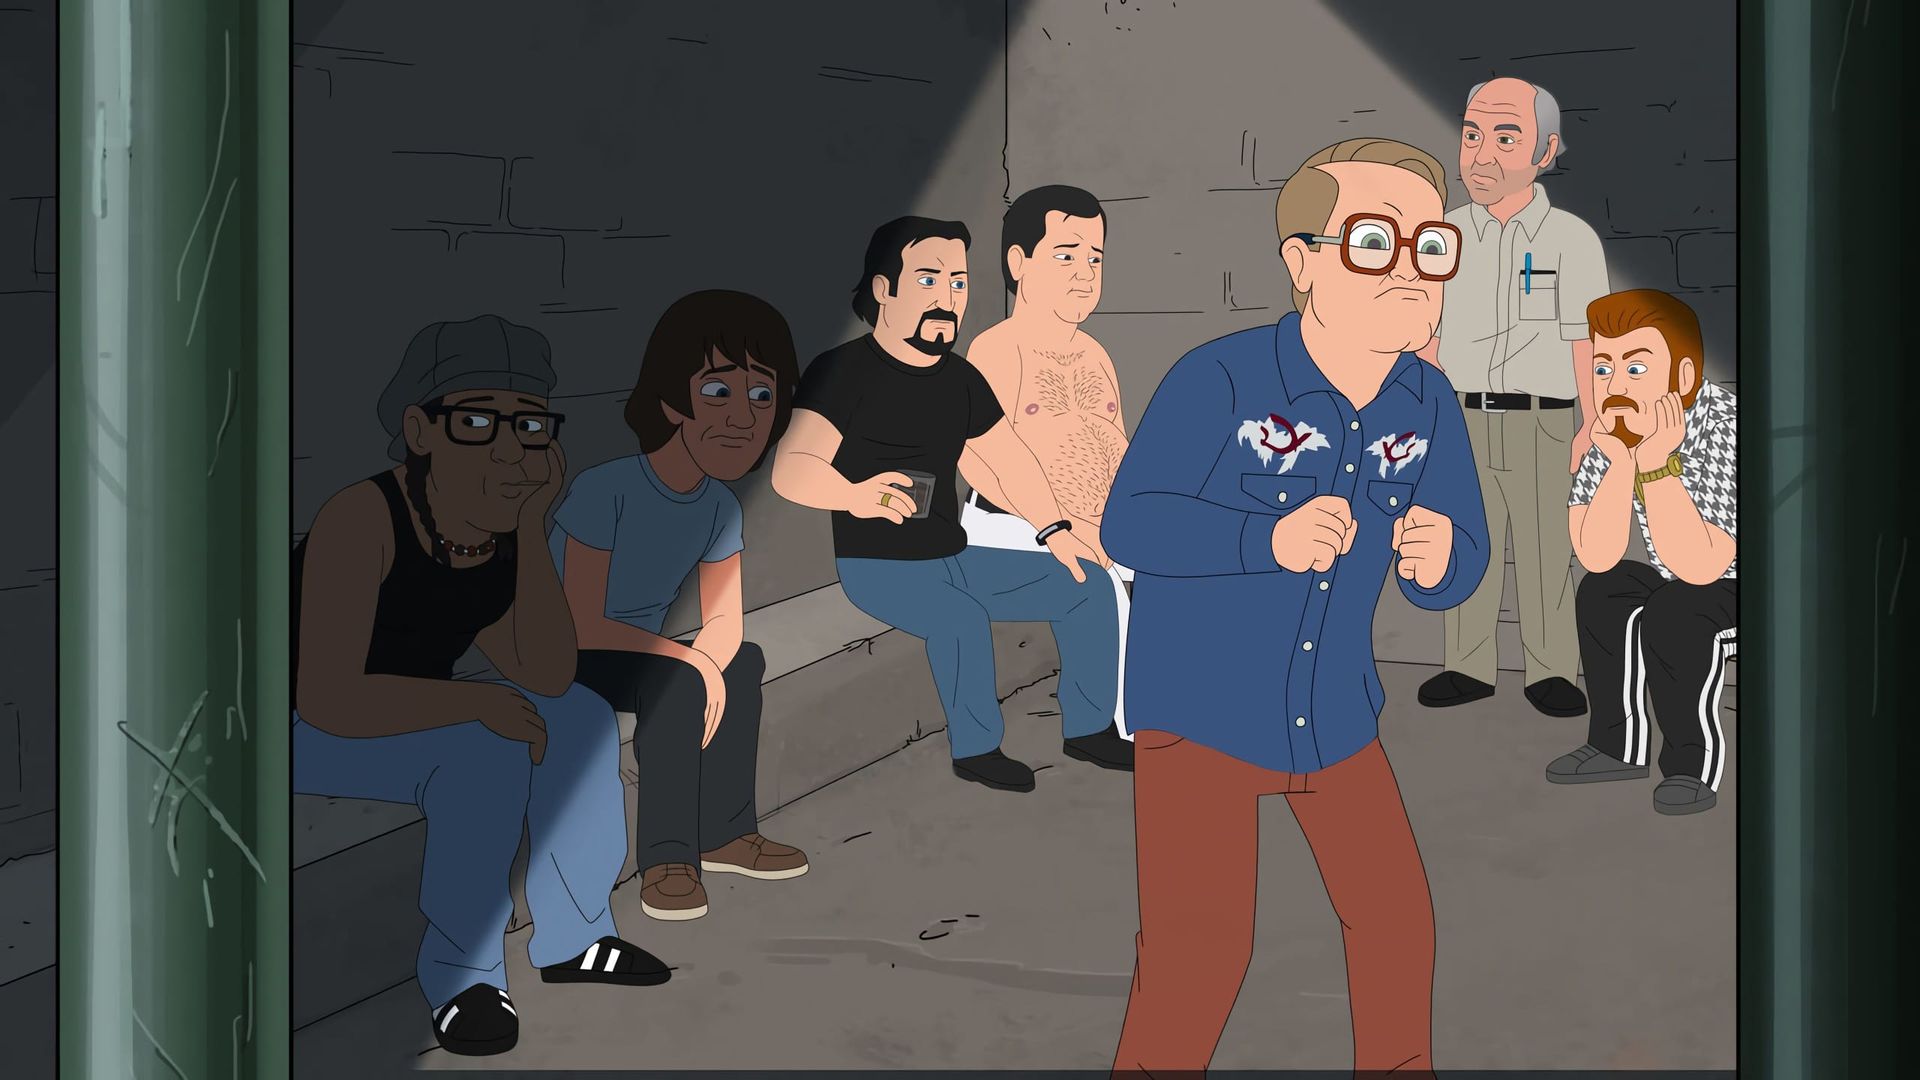 Trailer Park Boys: The Animated Series Backdrop